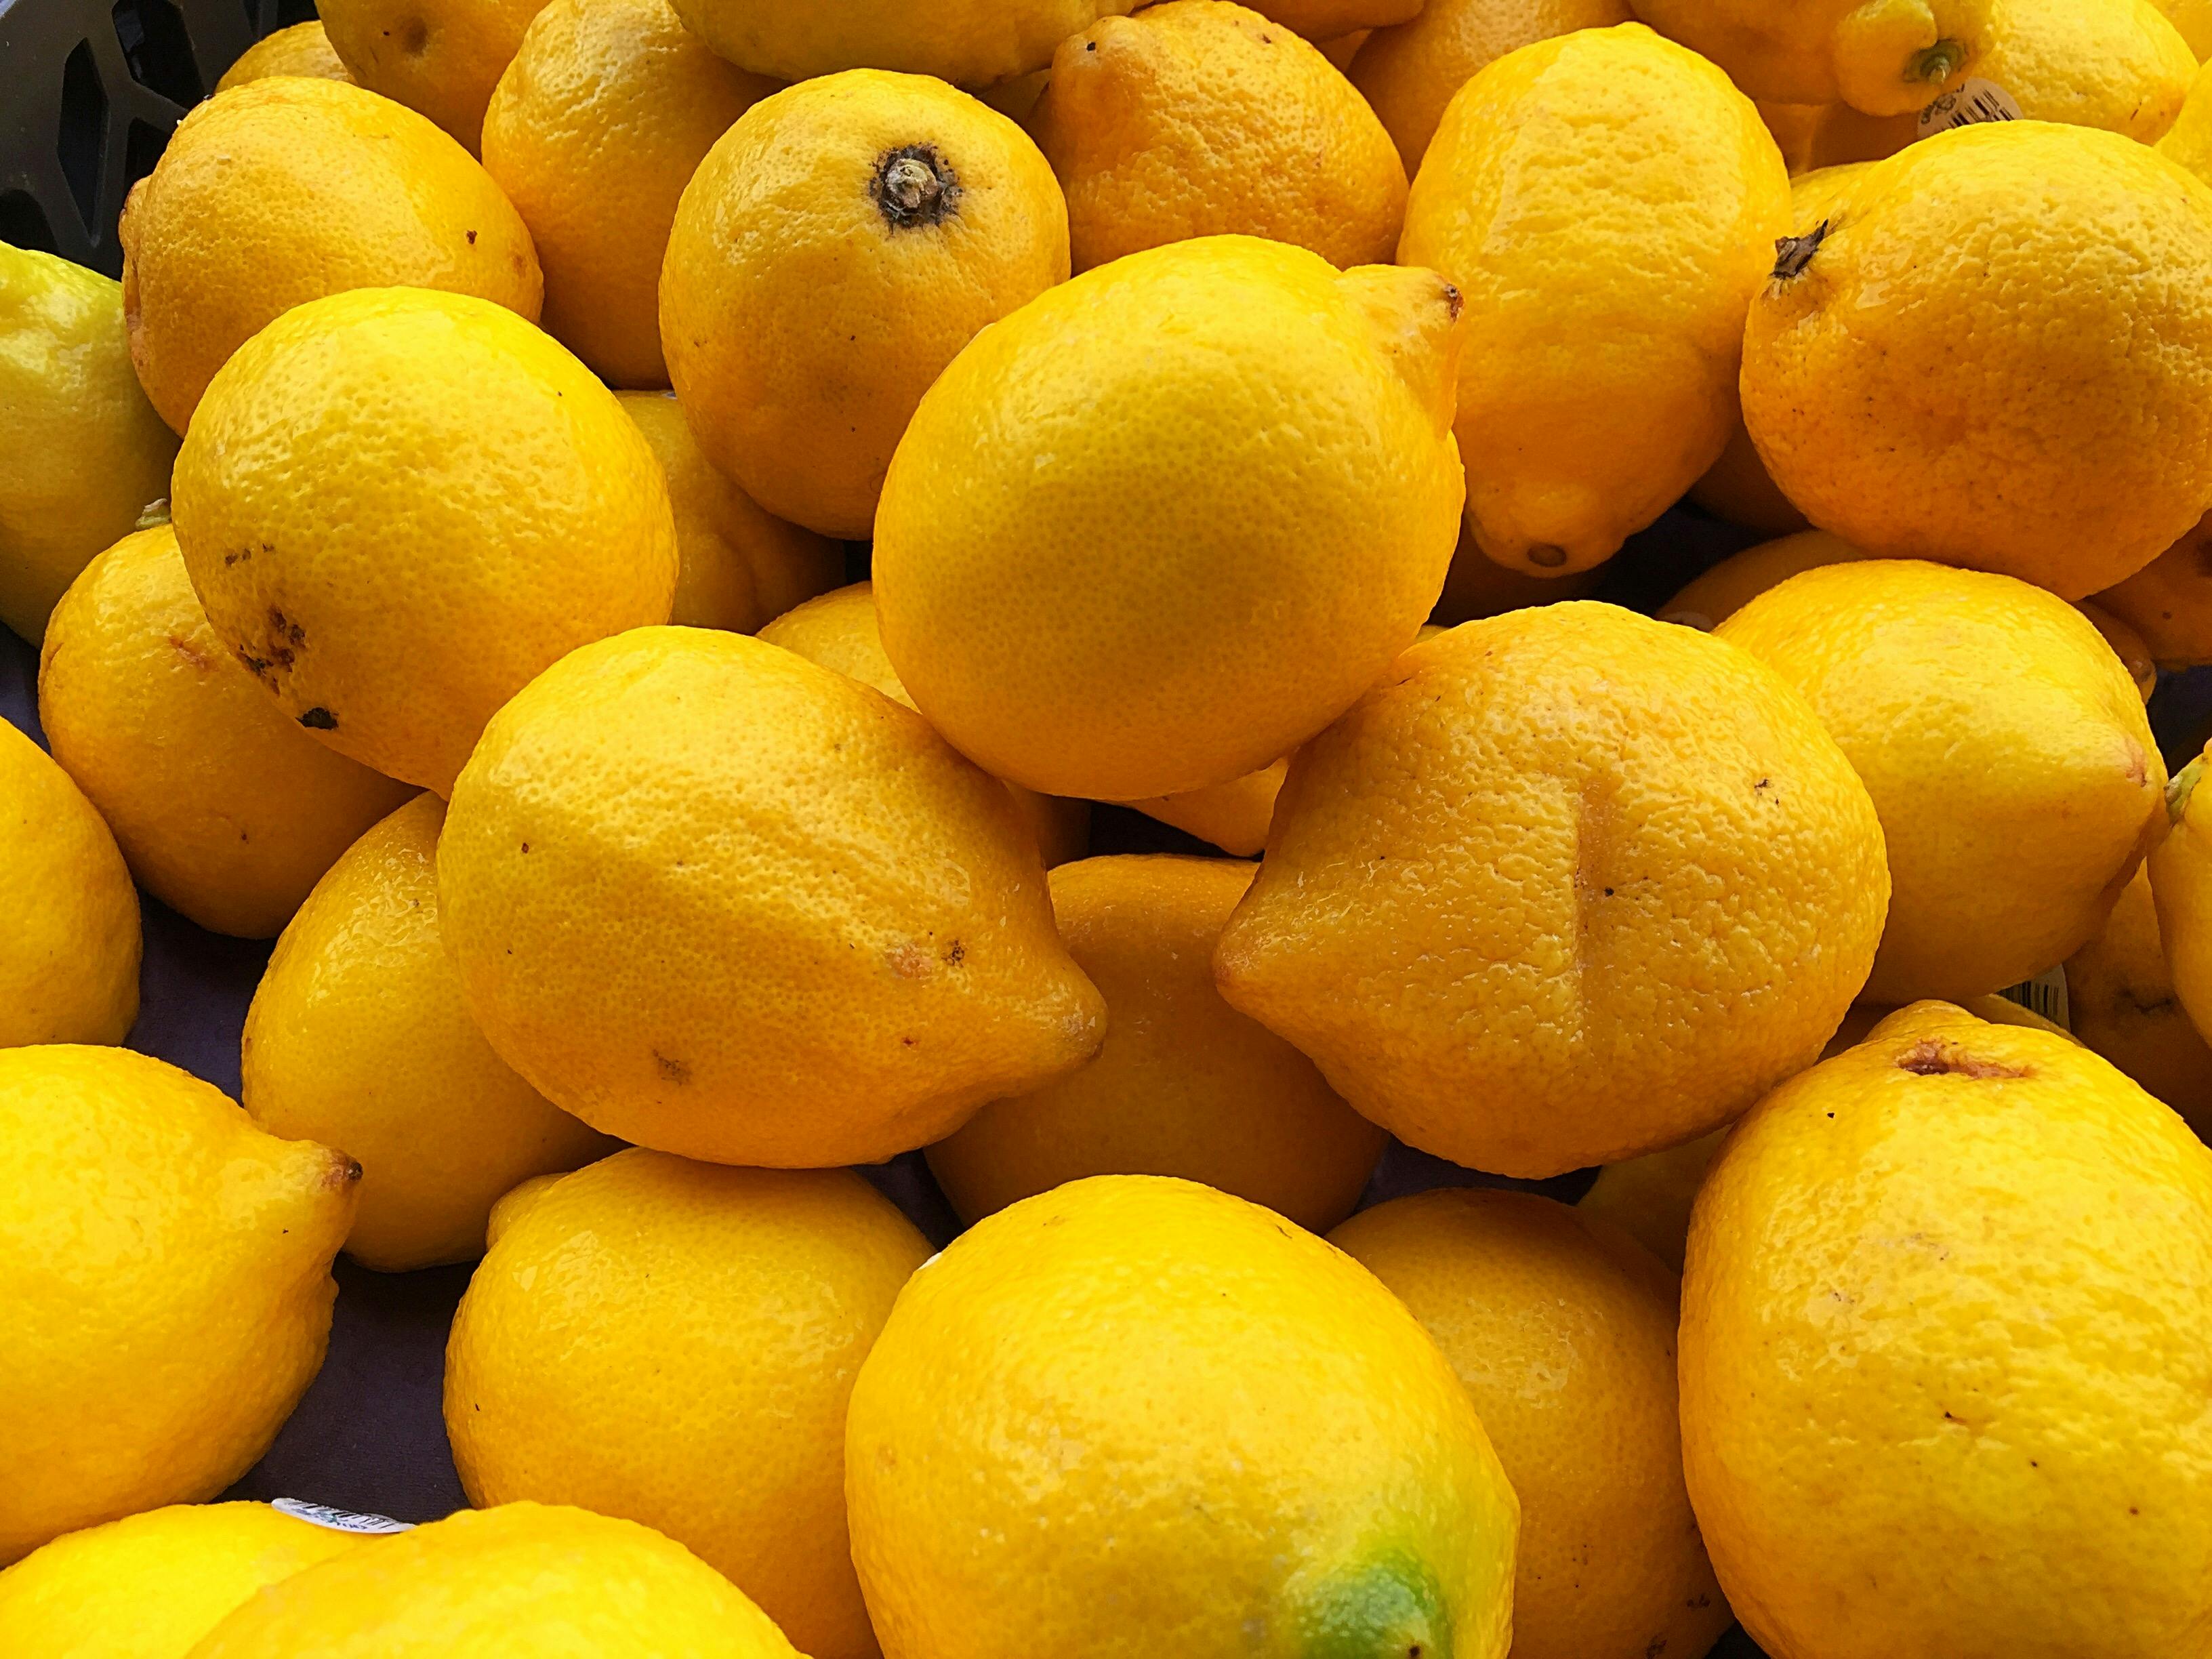 Kumpulan Gambar Buah Lemon Hitam Putih | Hitamputih44